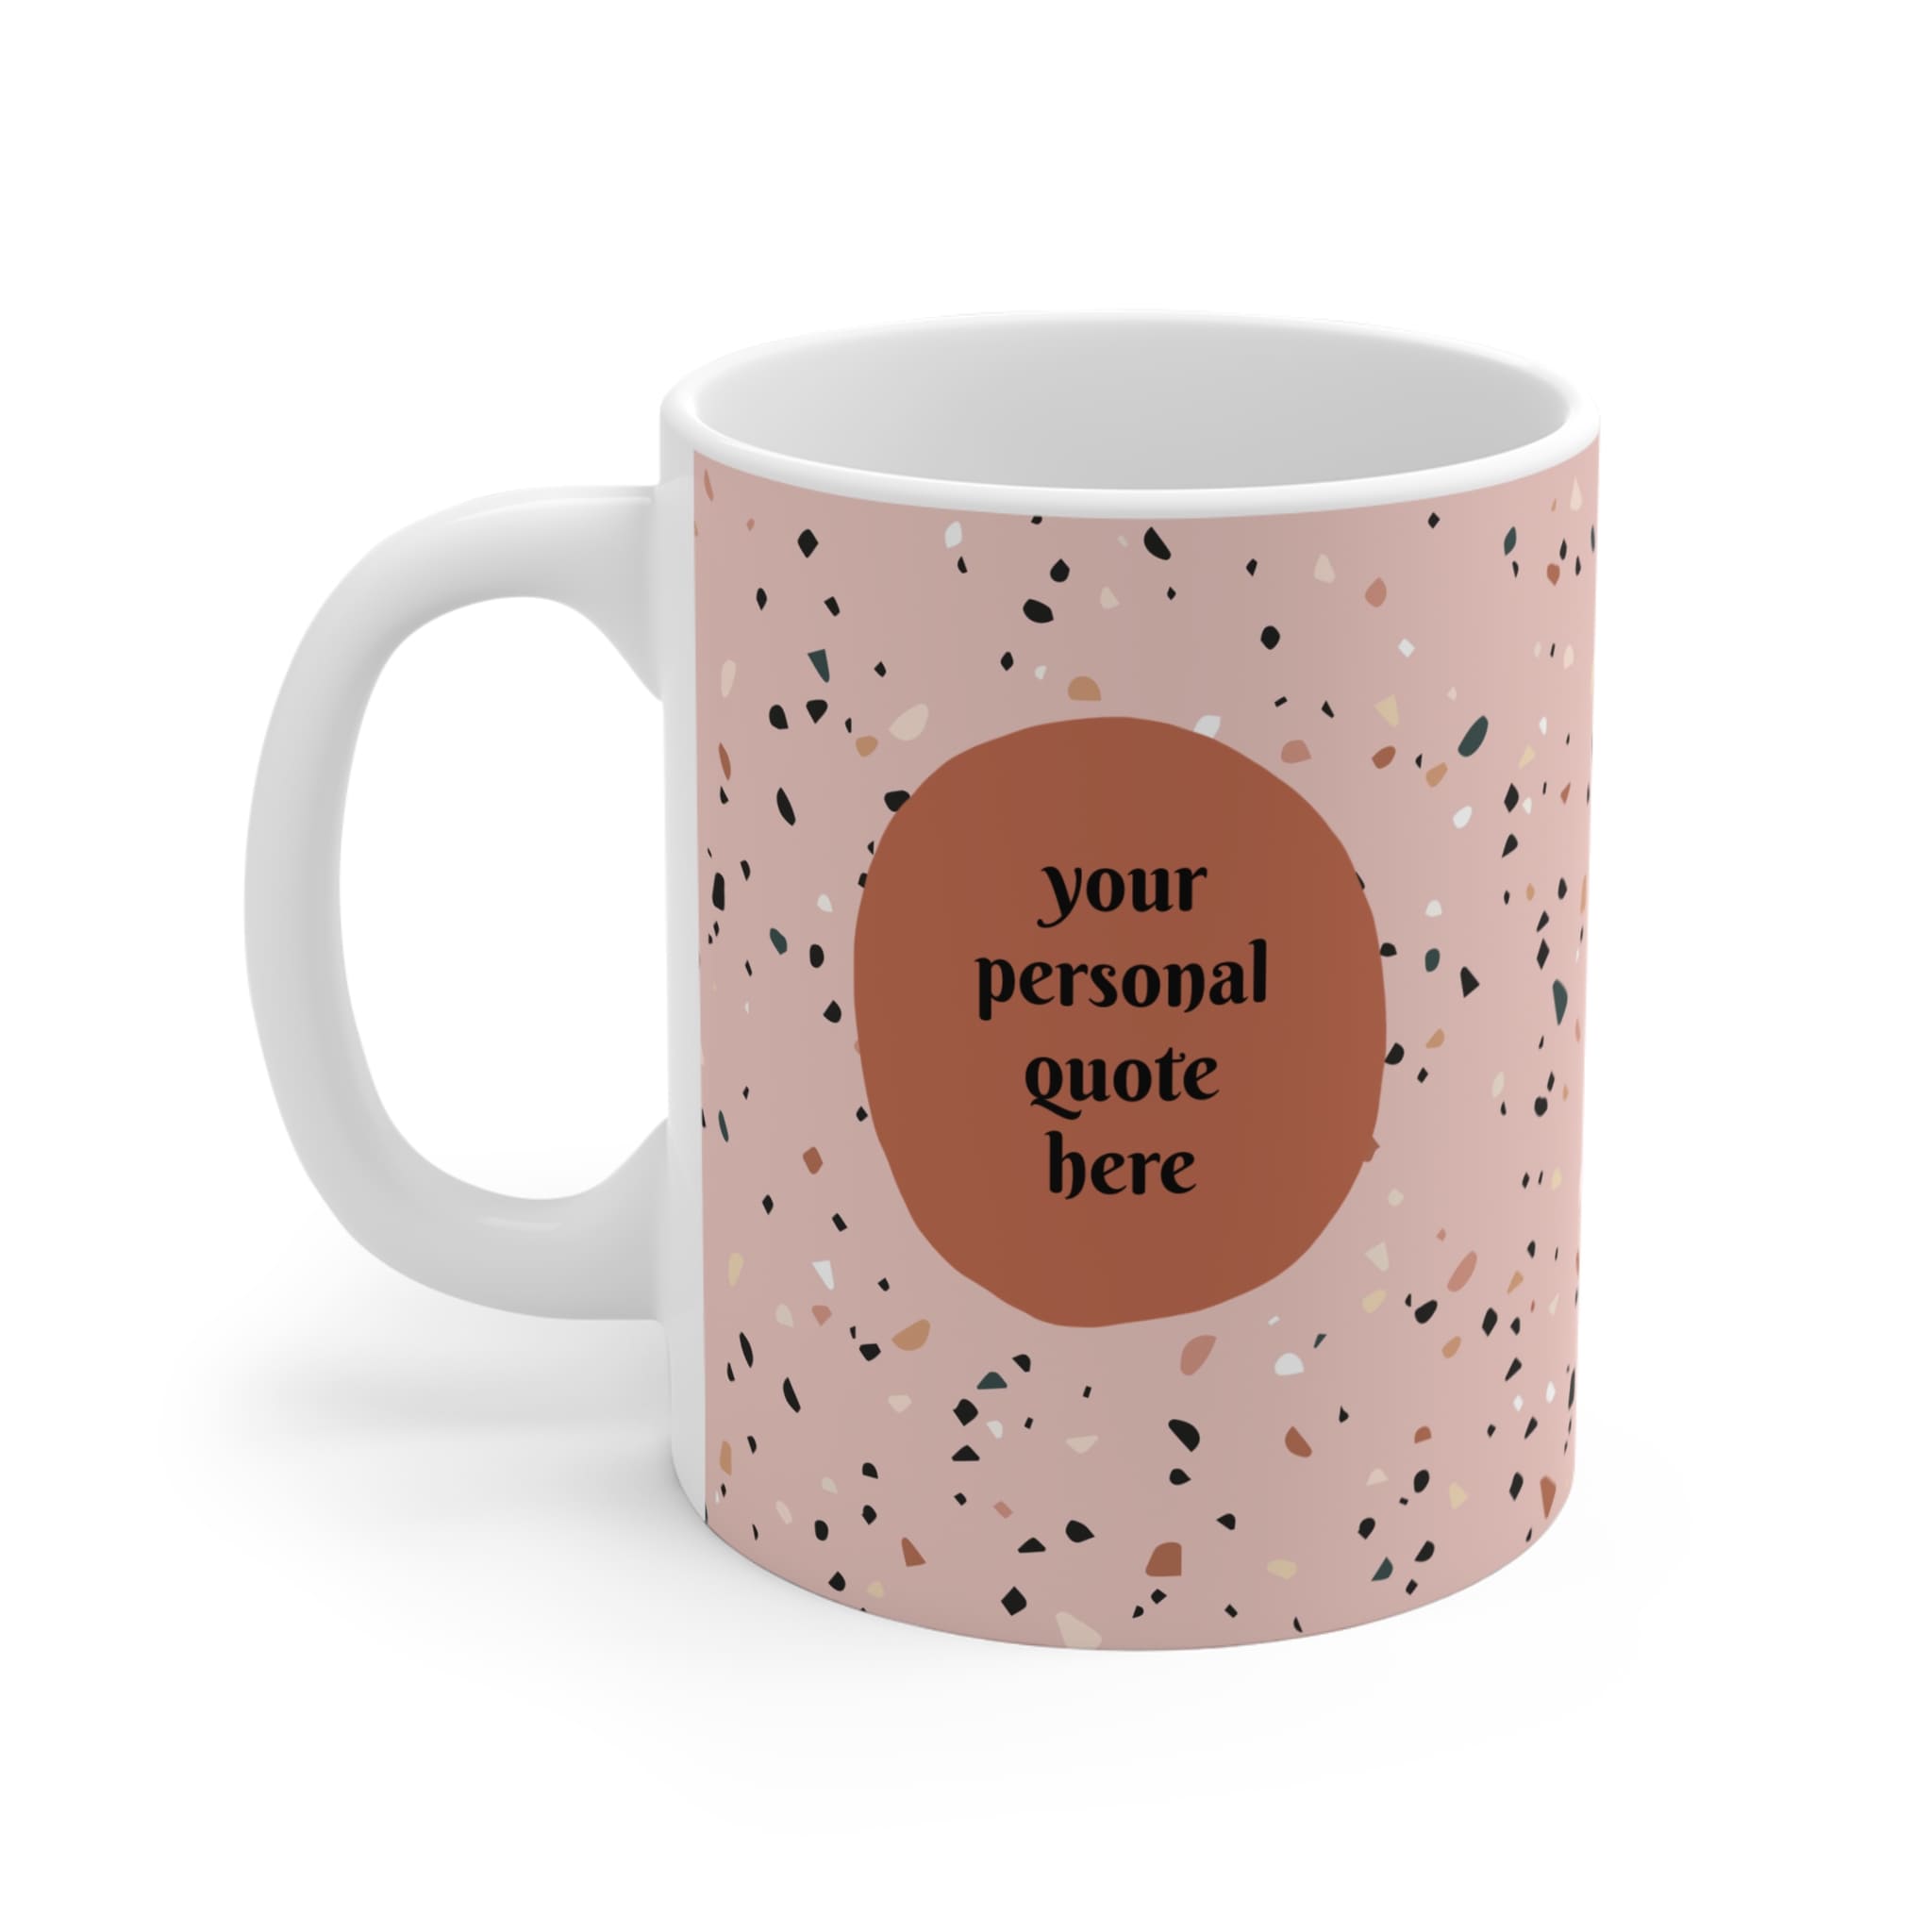 fashionable designer mug with custom quote and portrait illustration line art style on light pink terrazzo pattern